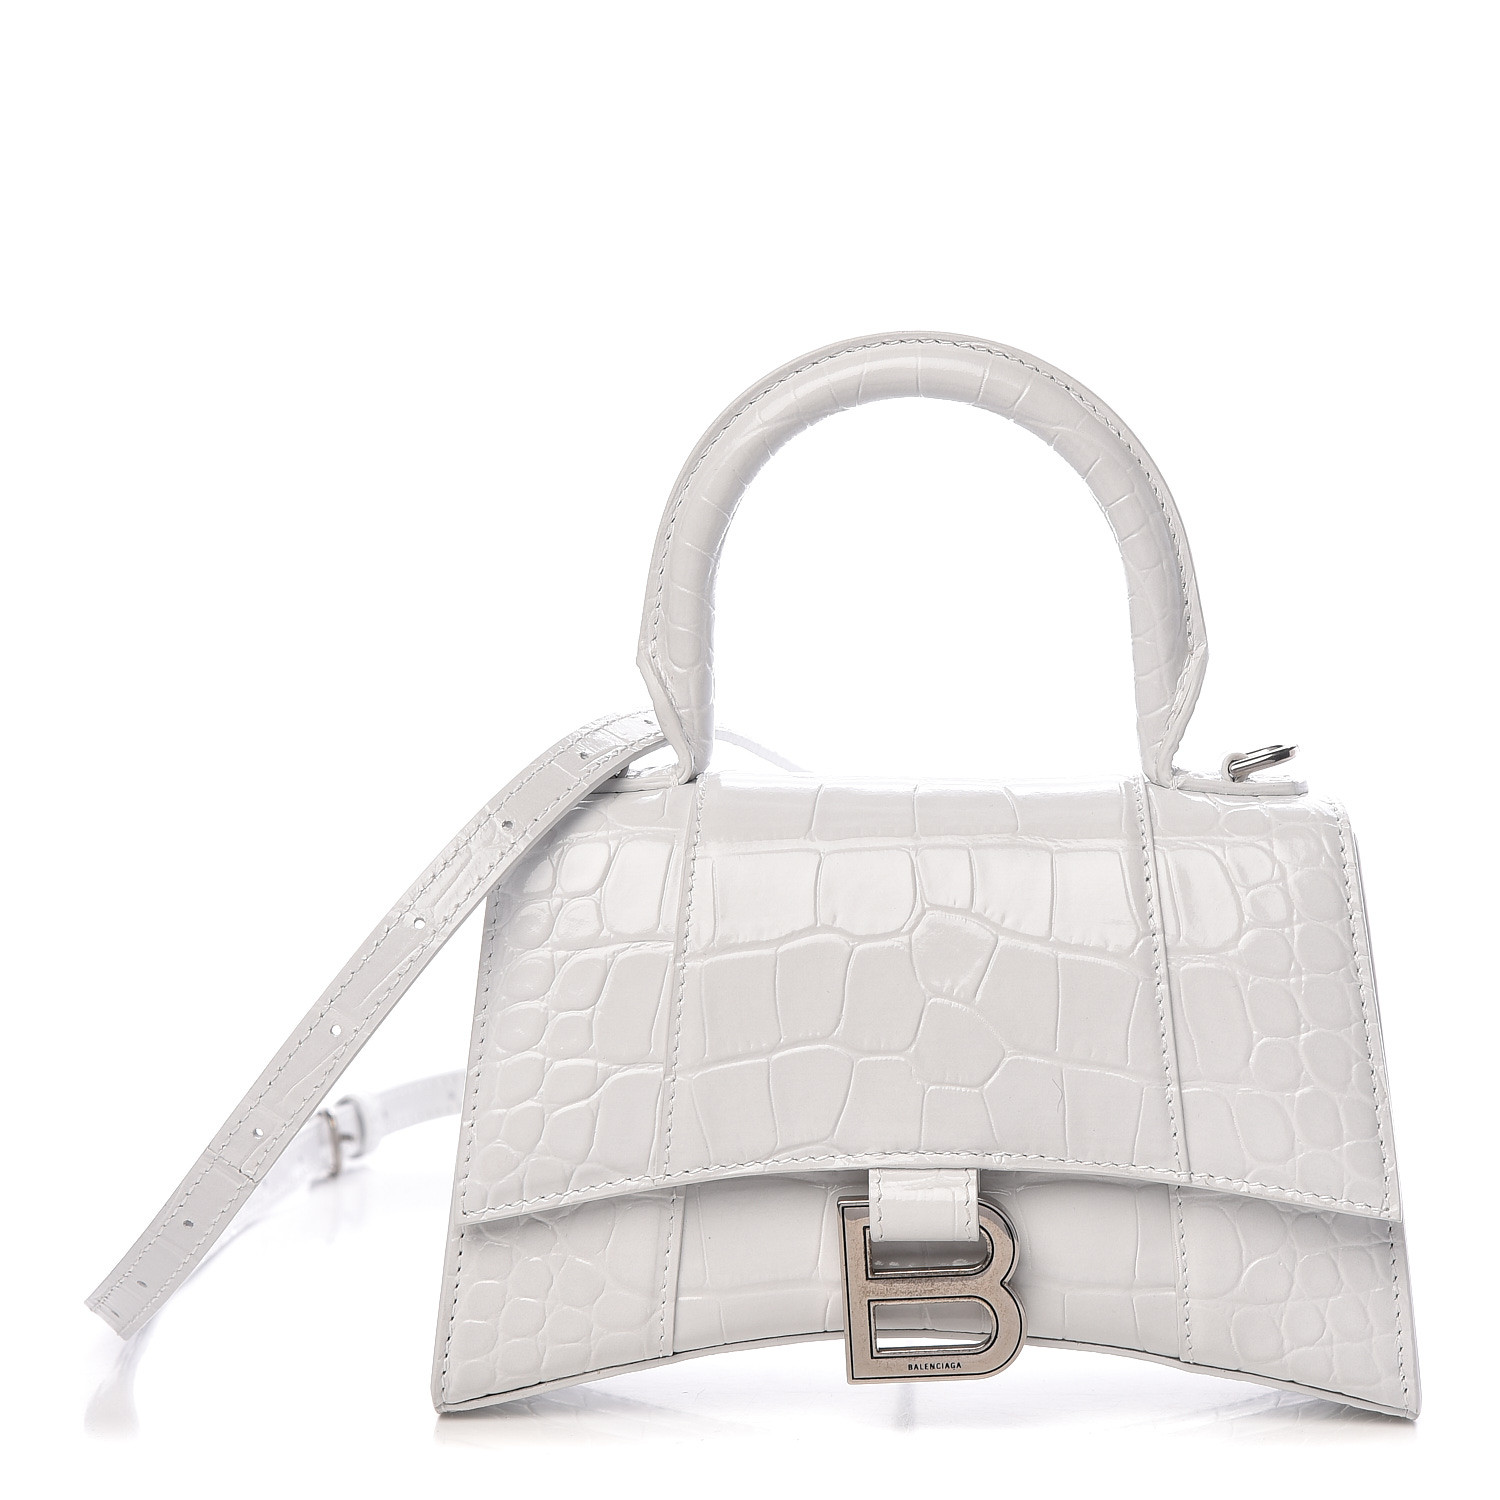 Balenciaga Hourglass Bag White Hotsell, 55% OFF | espirituviajero.com